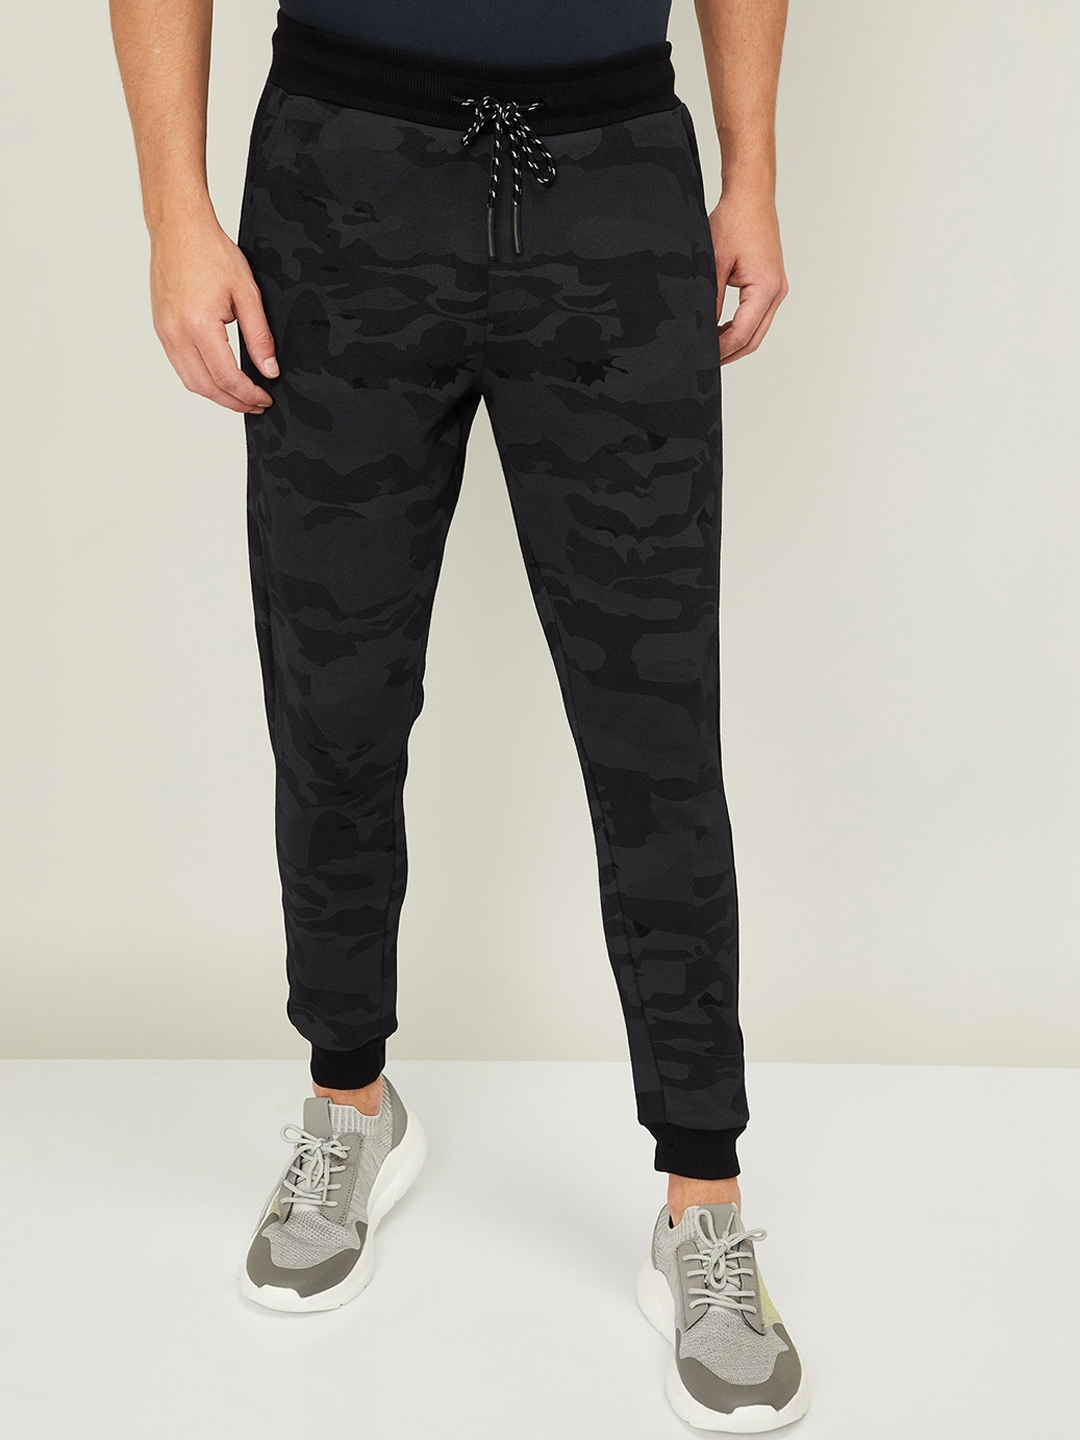 Buy Bossini Men Black & Grey Camouflage Printed Joggers - Track Pants ...